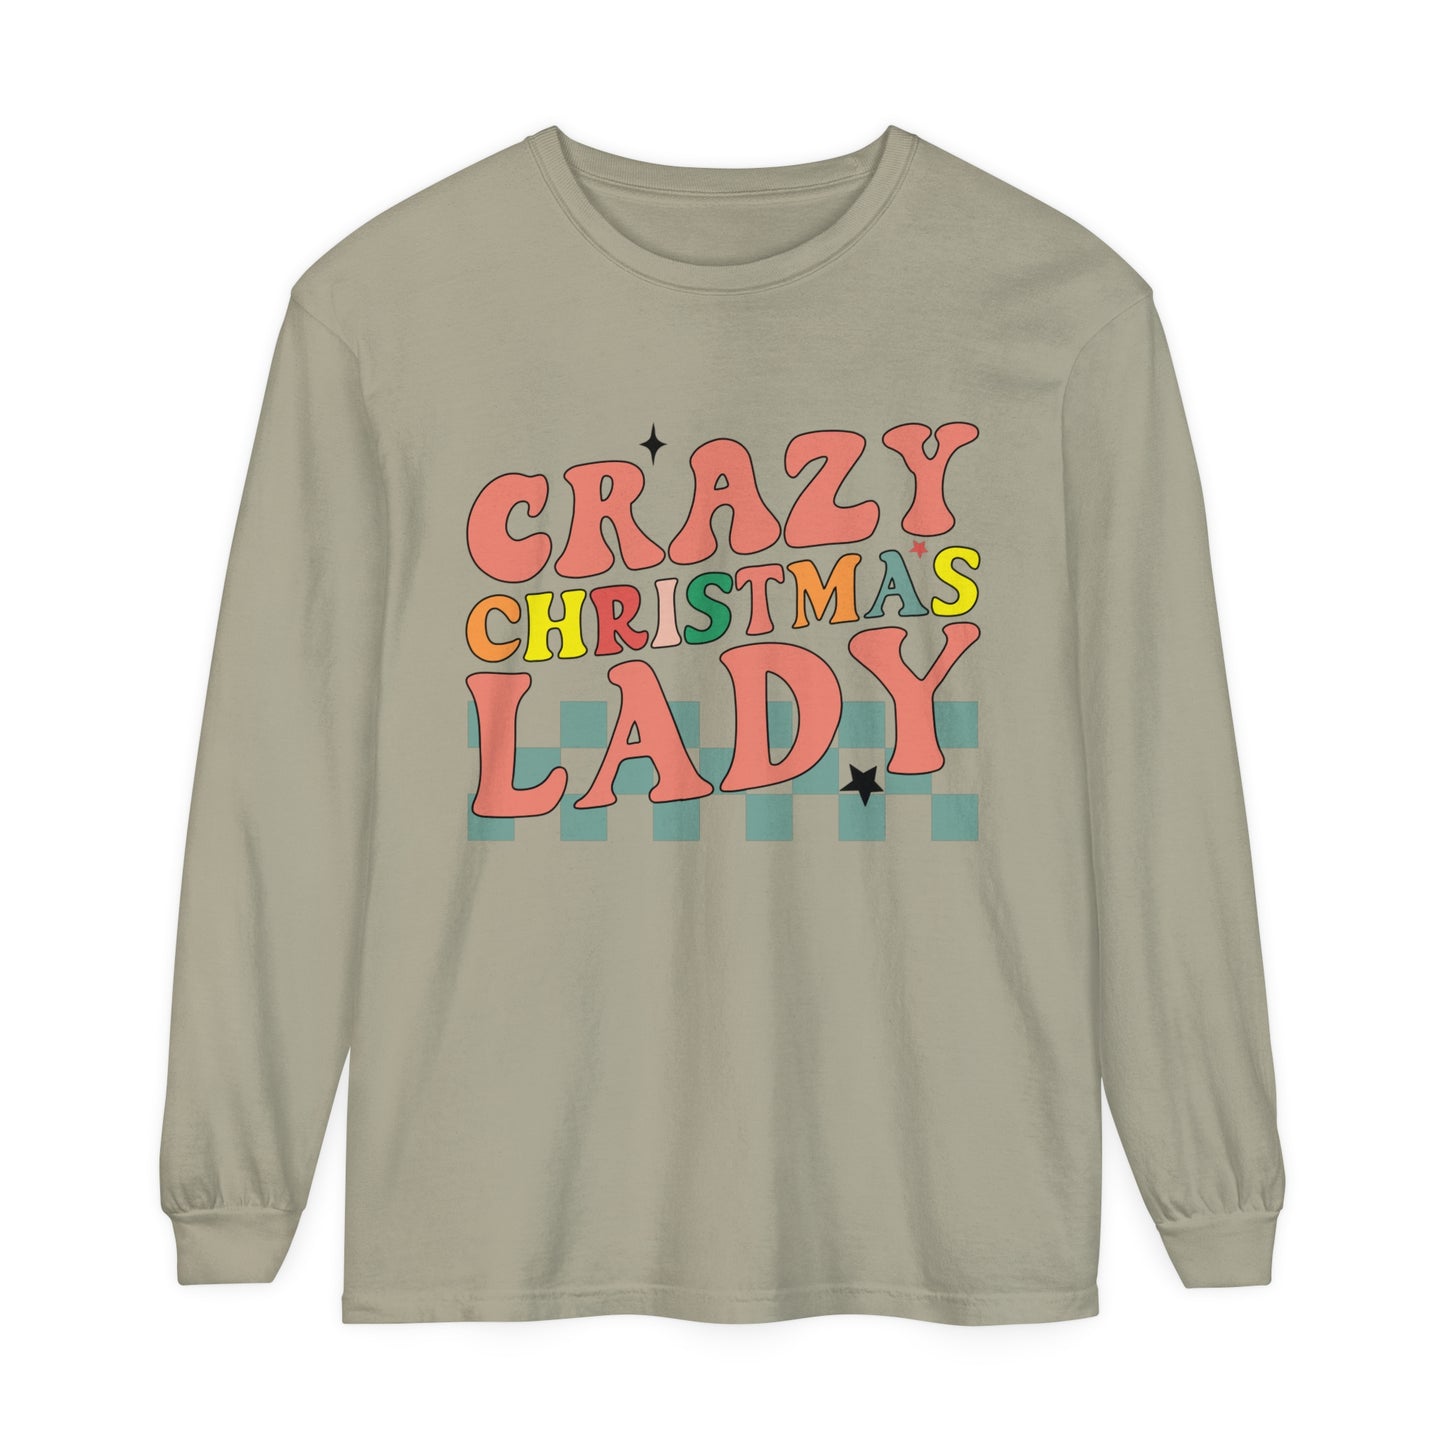 Crazy Christmas Lady Women's Christmas Loose Long Sleeve T-Shirt